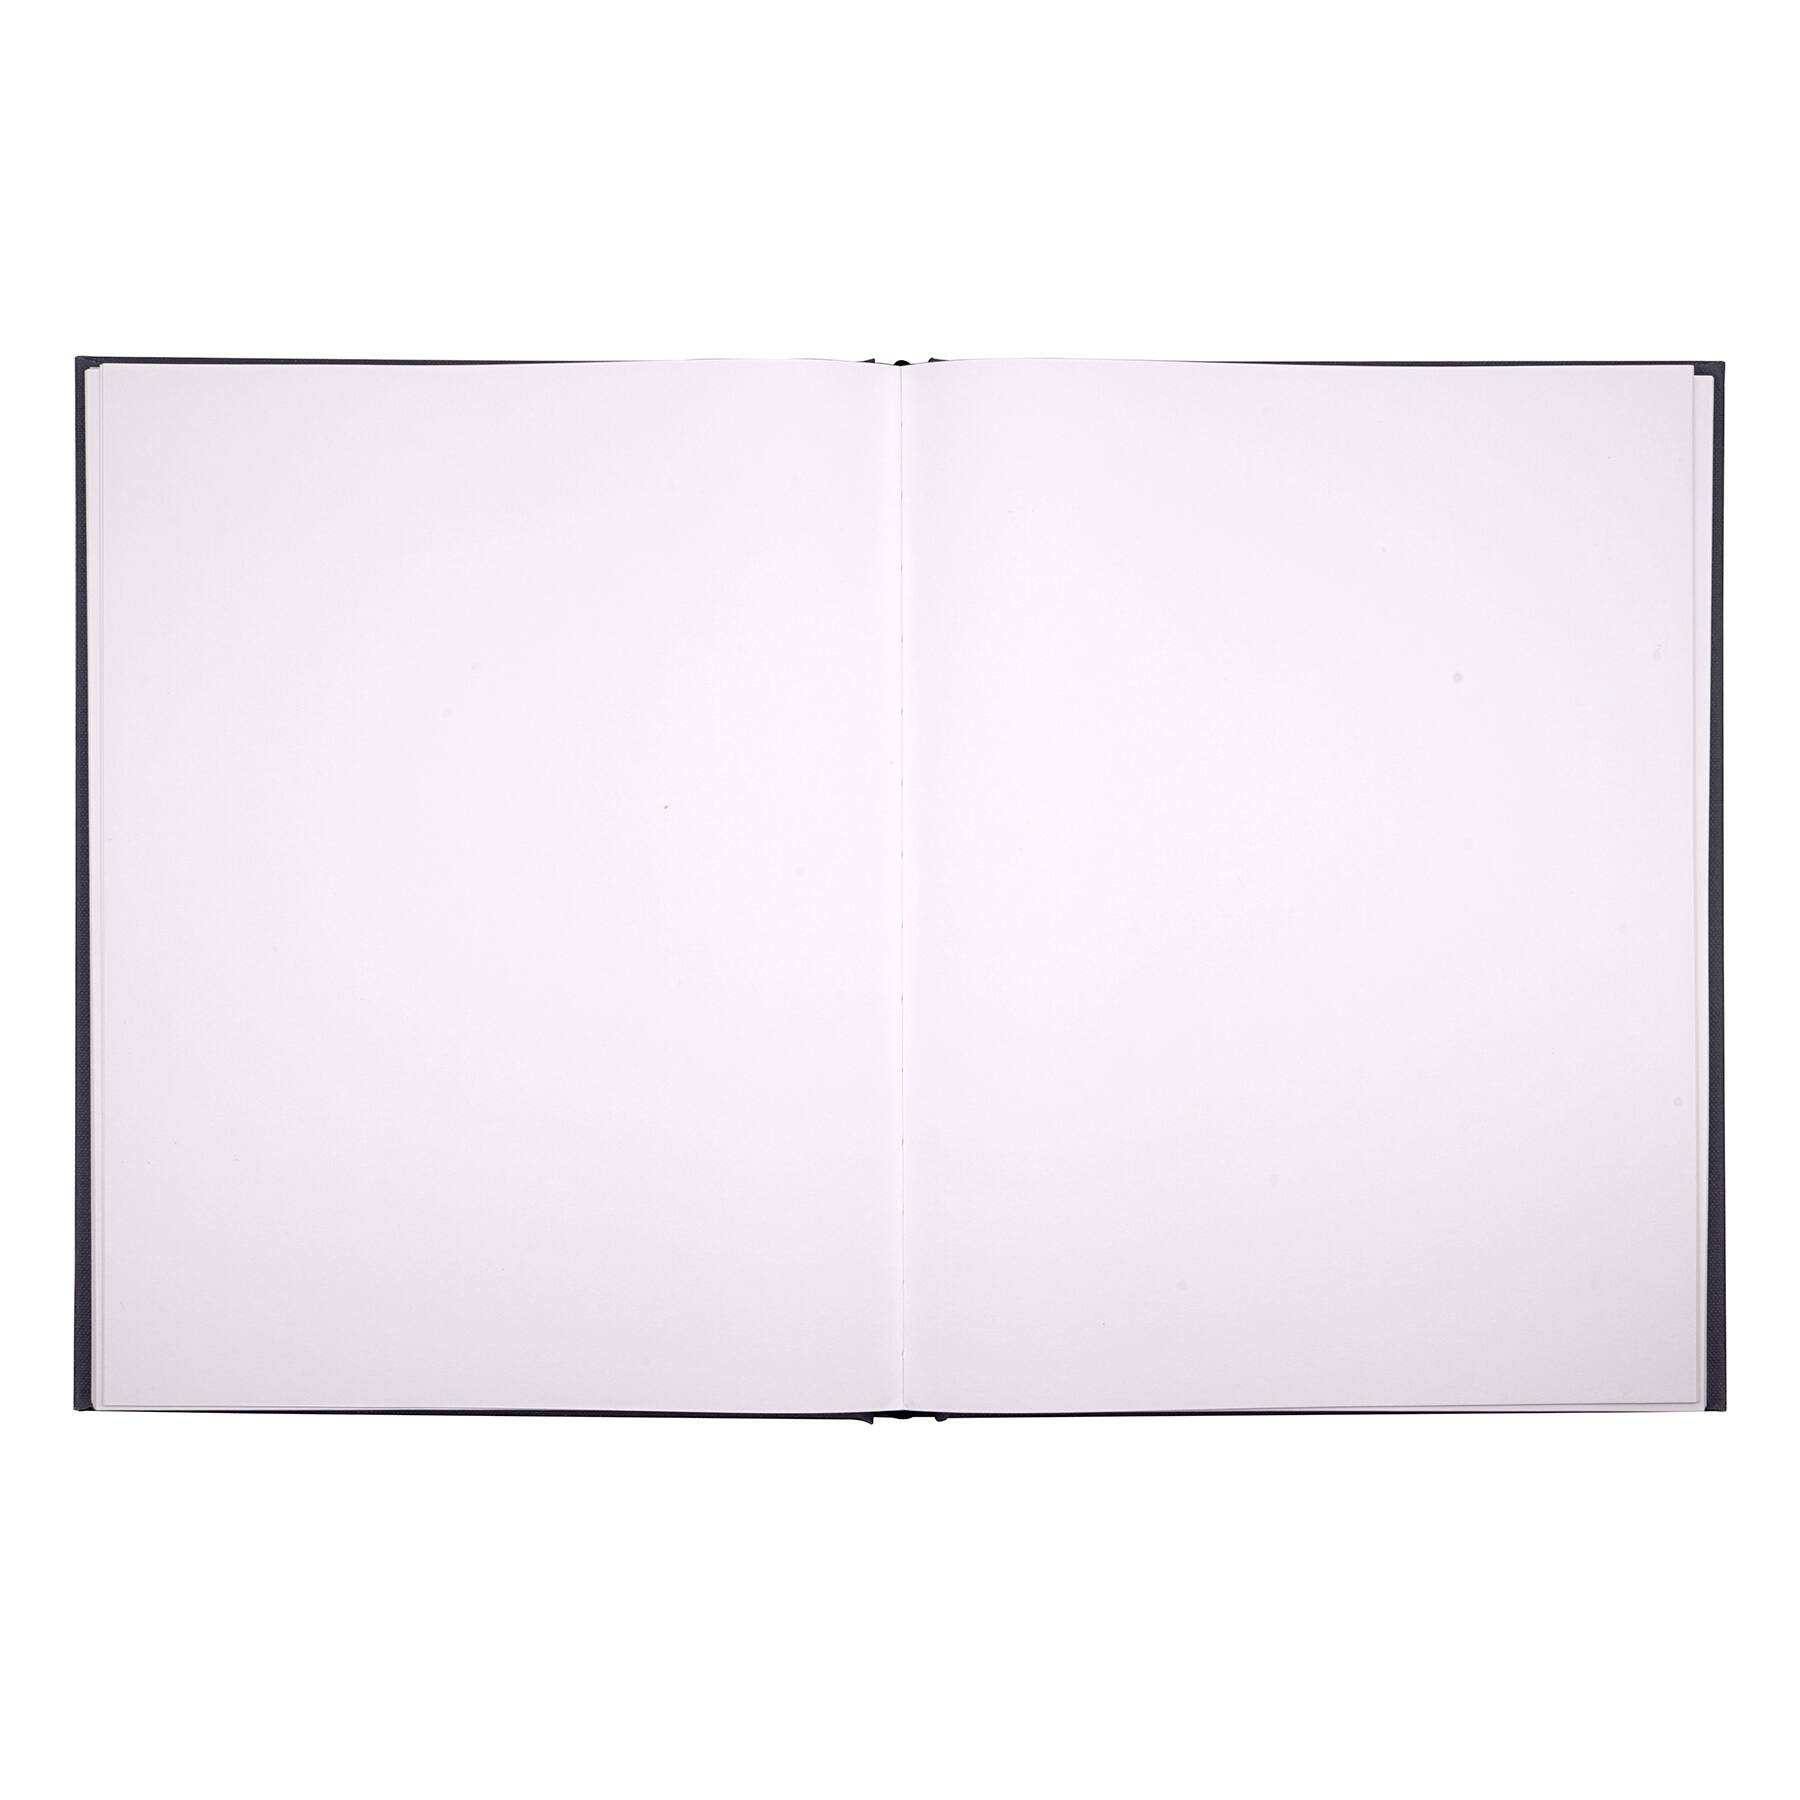 12 Pack: Sketchbook by Artist's Loft, 4 inch x 4 inch, Size: 4 x 4, Blue